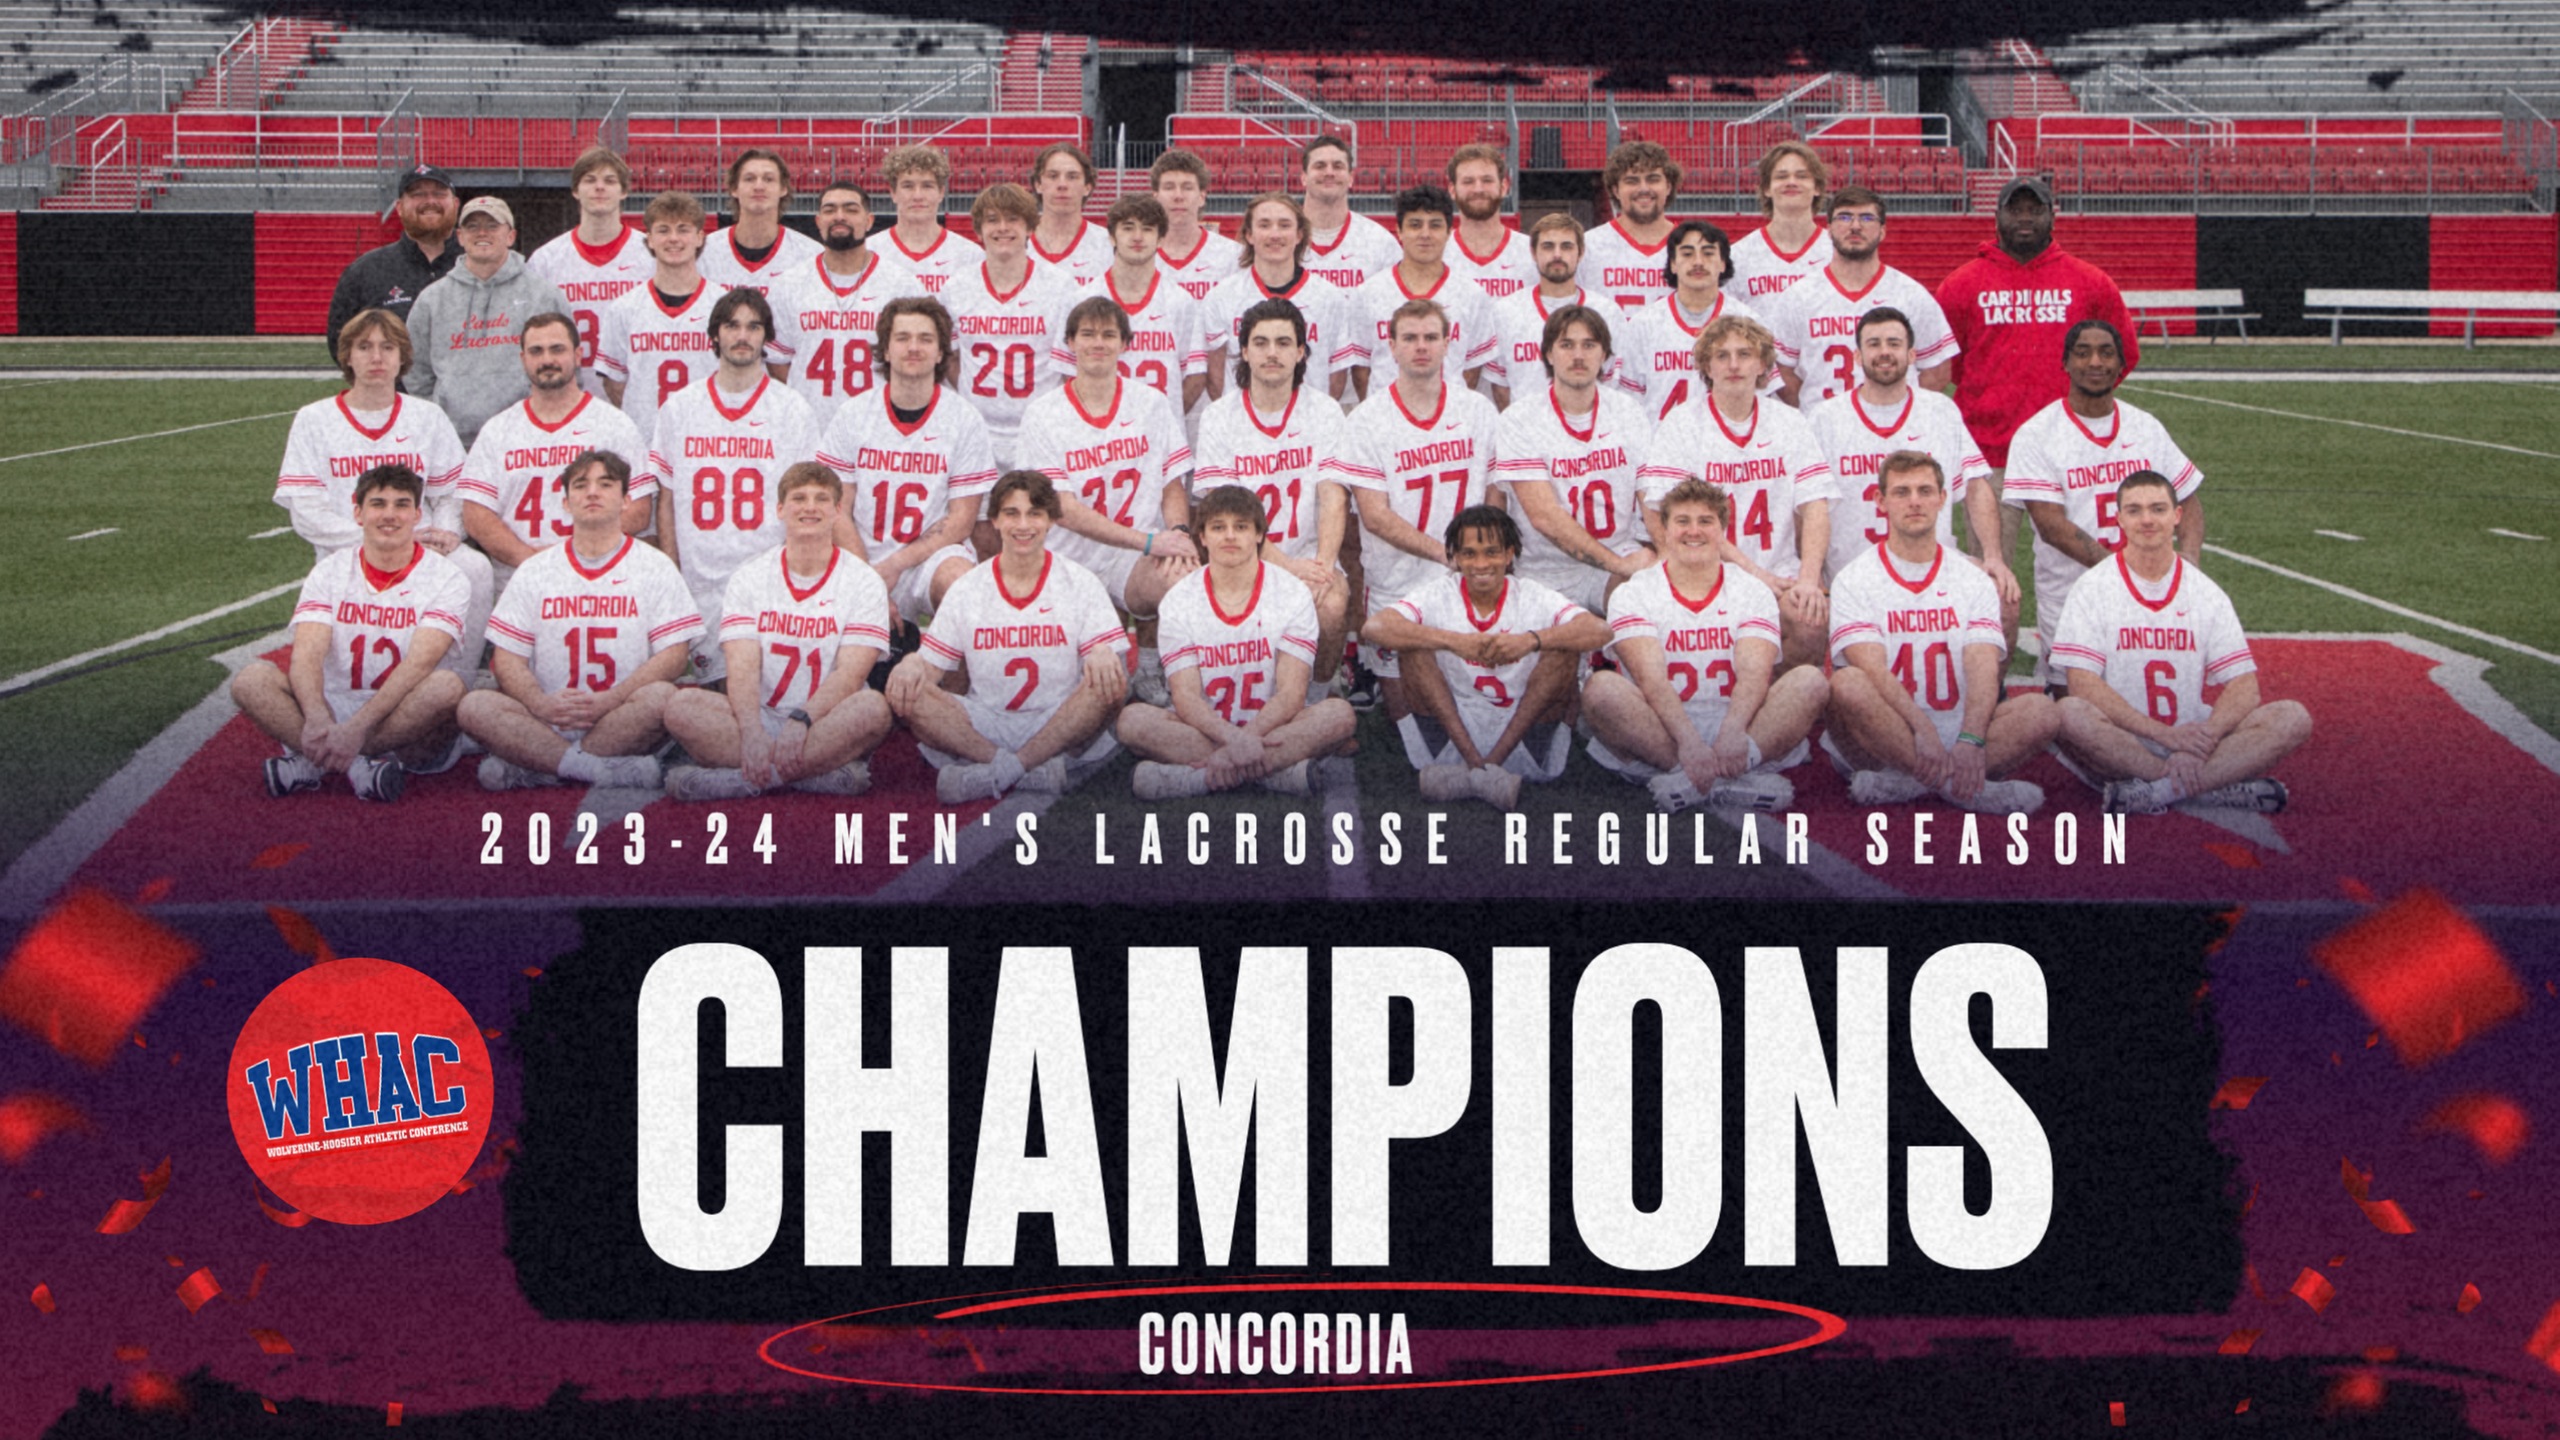 Concordia Repeats as Men's Lacrosse Regular Season Champion